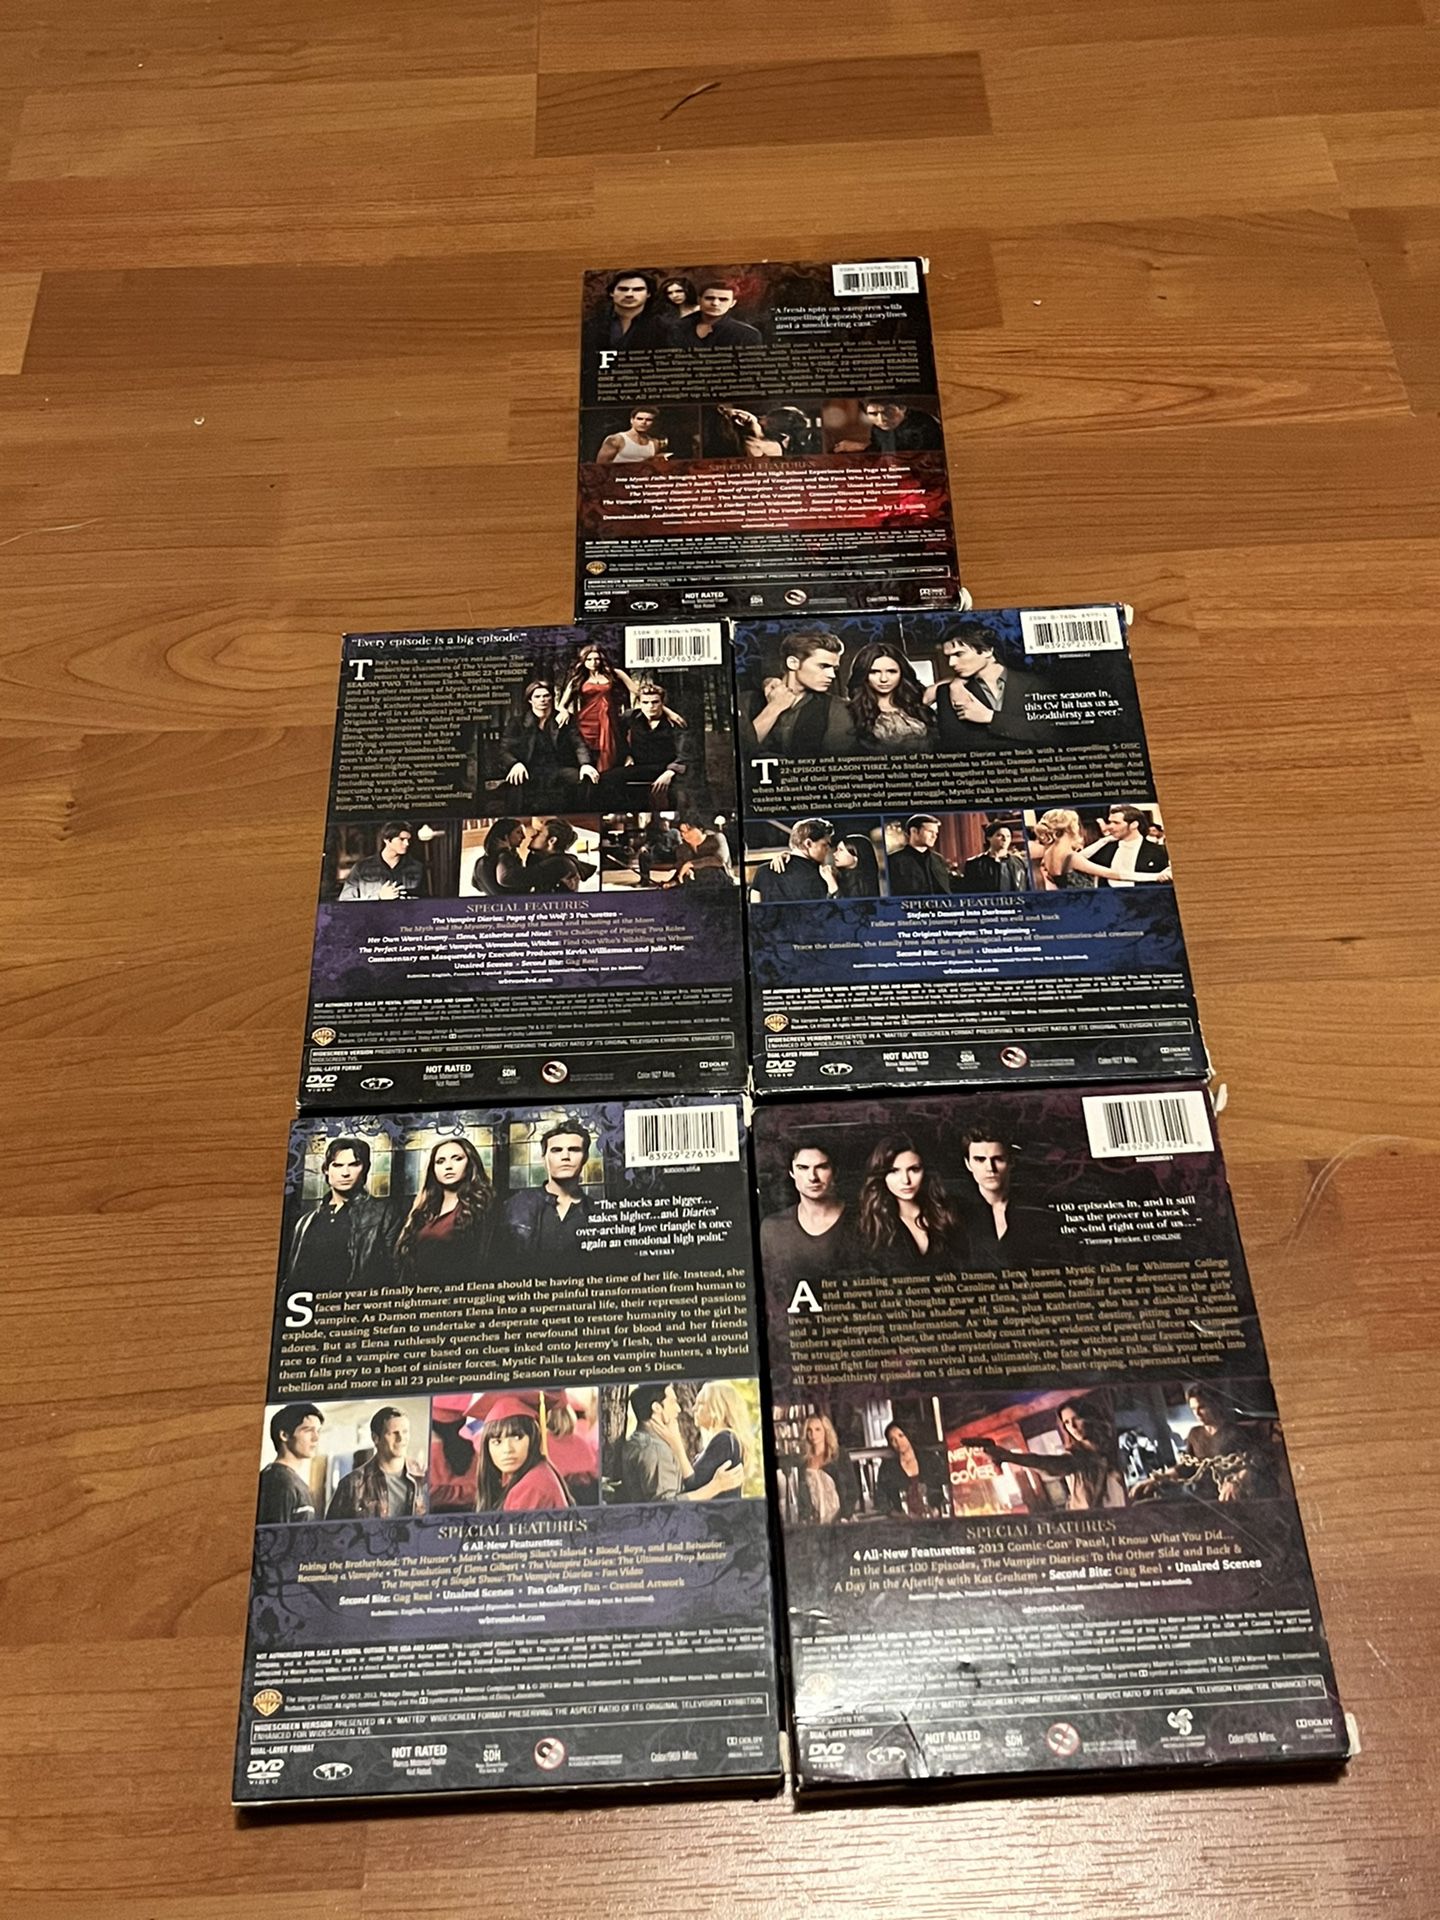 The Vampire Diaries Collectors Set 